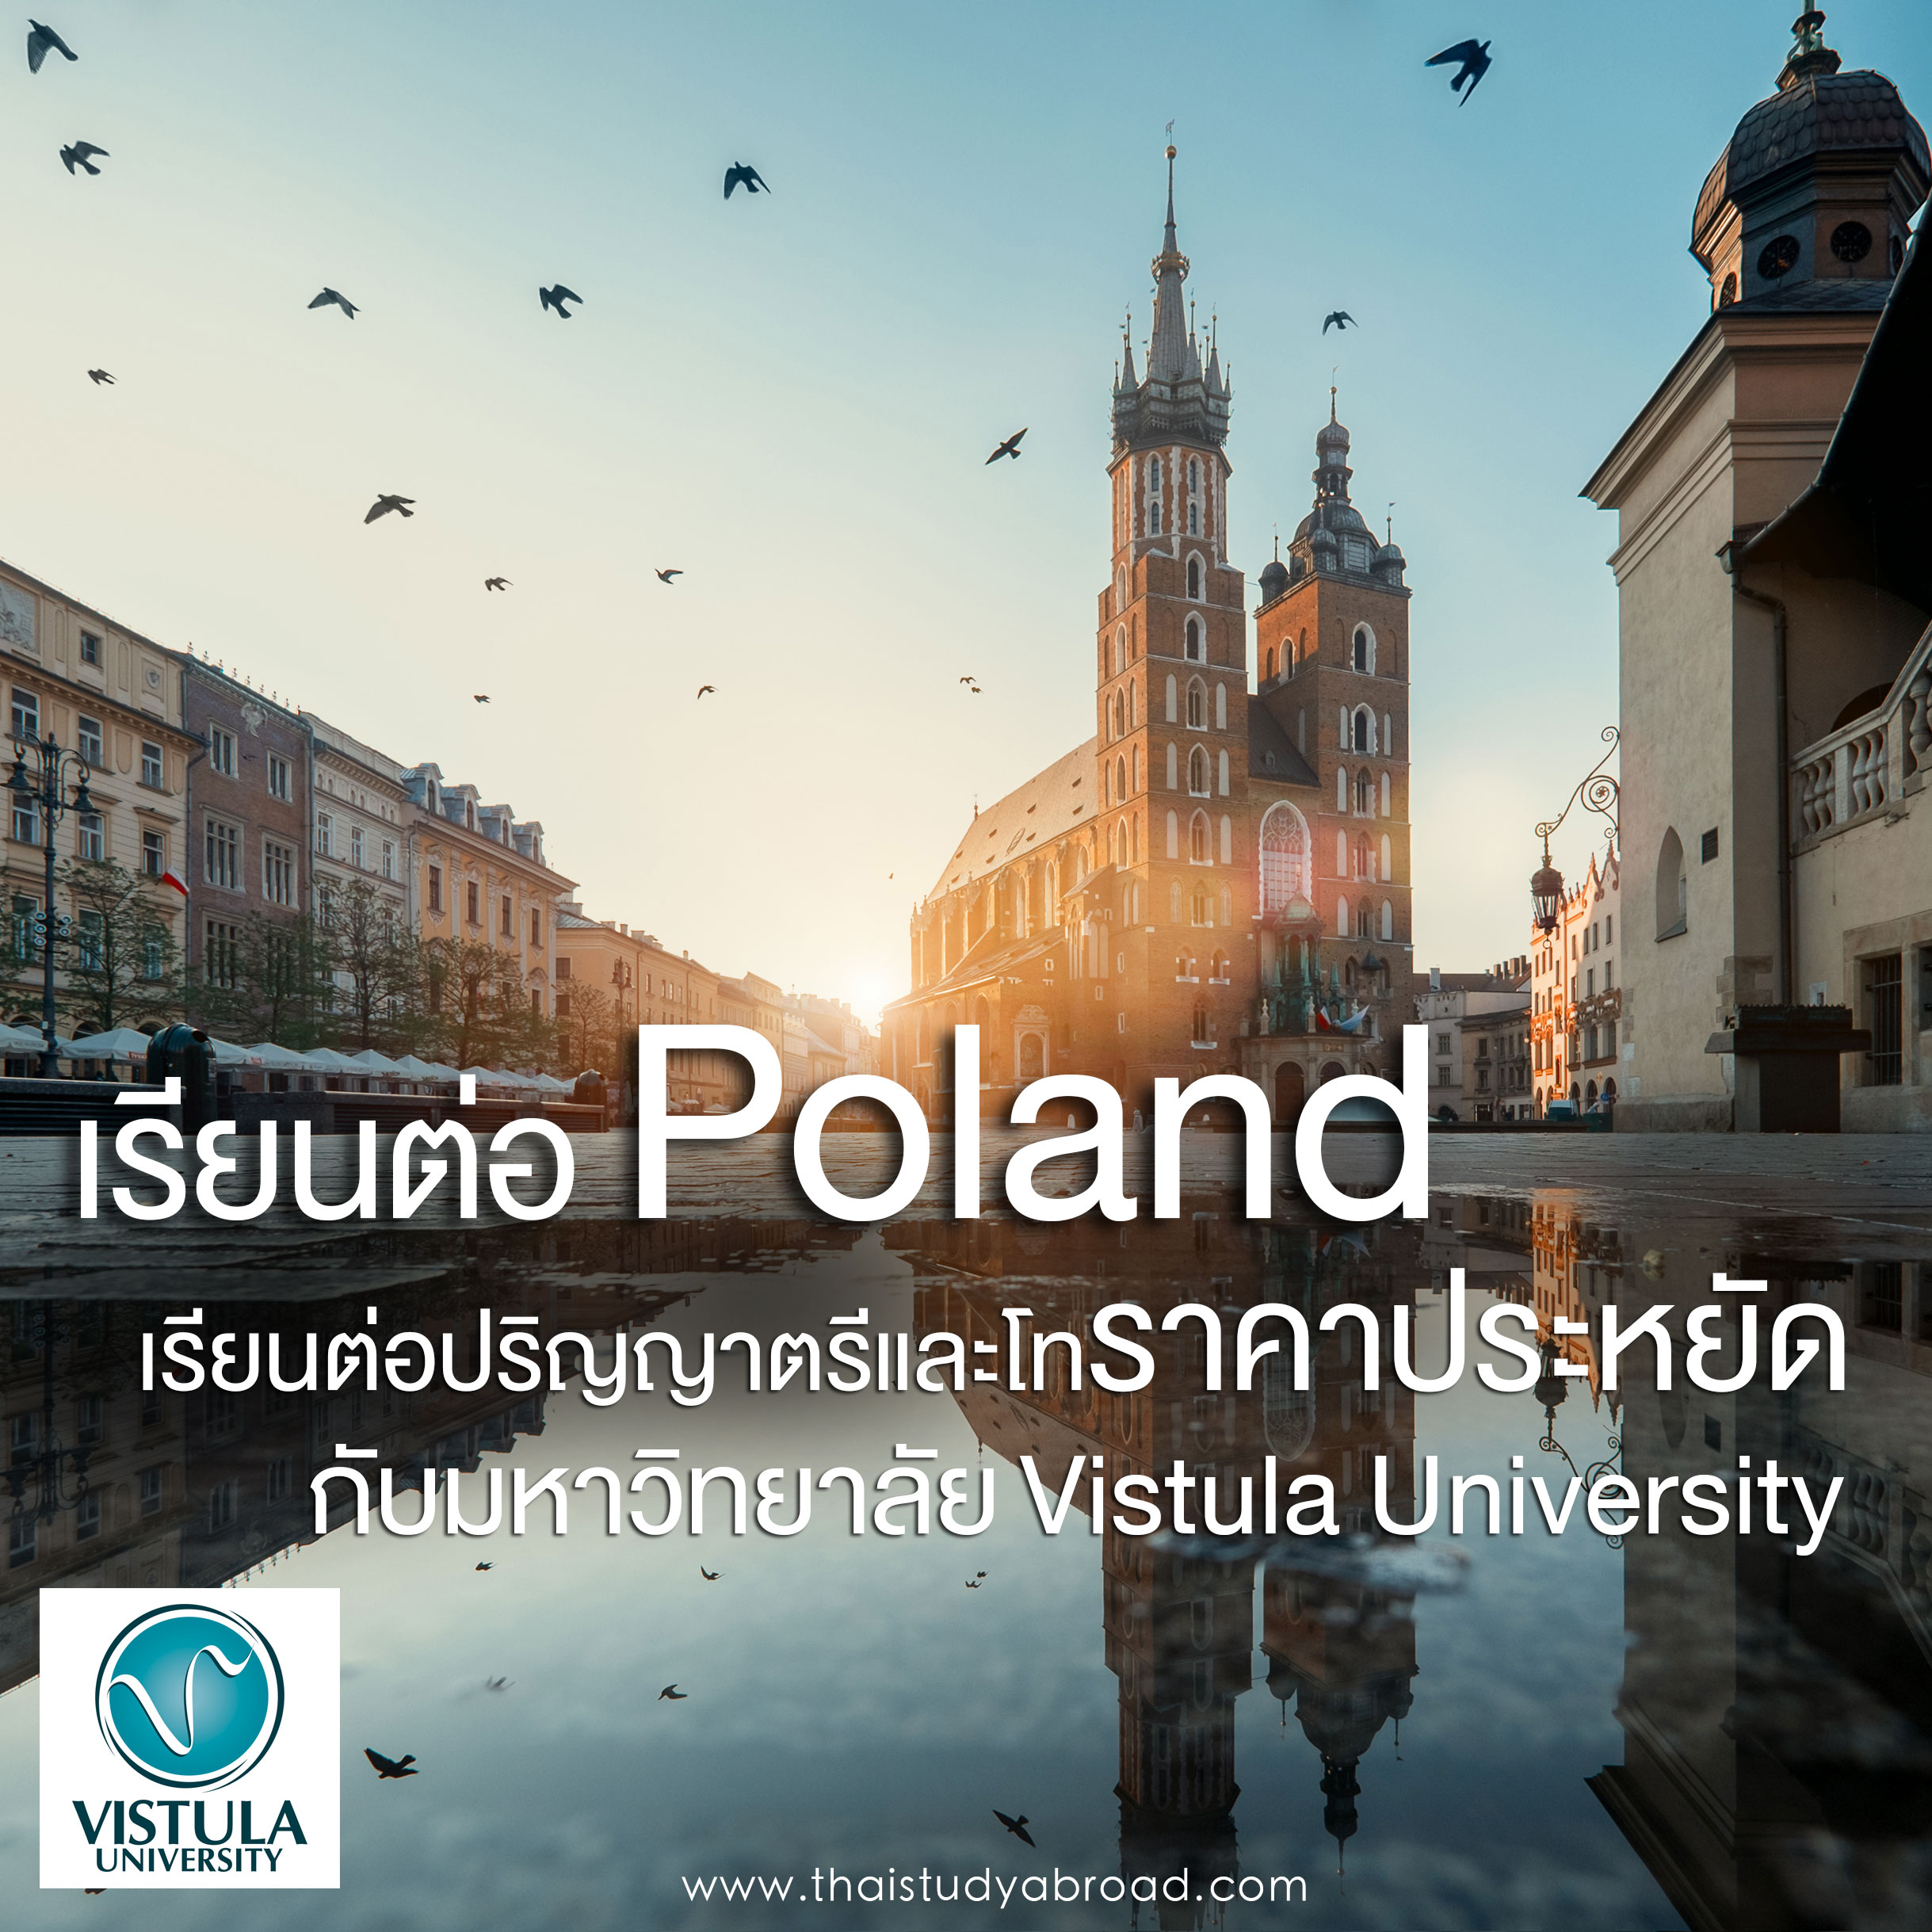 Vistular University